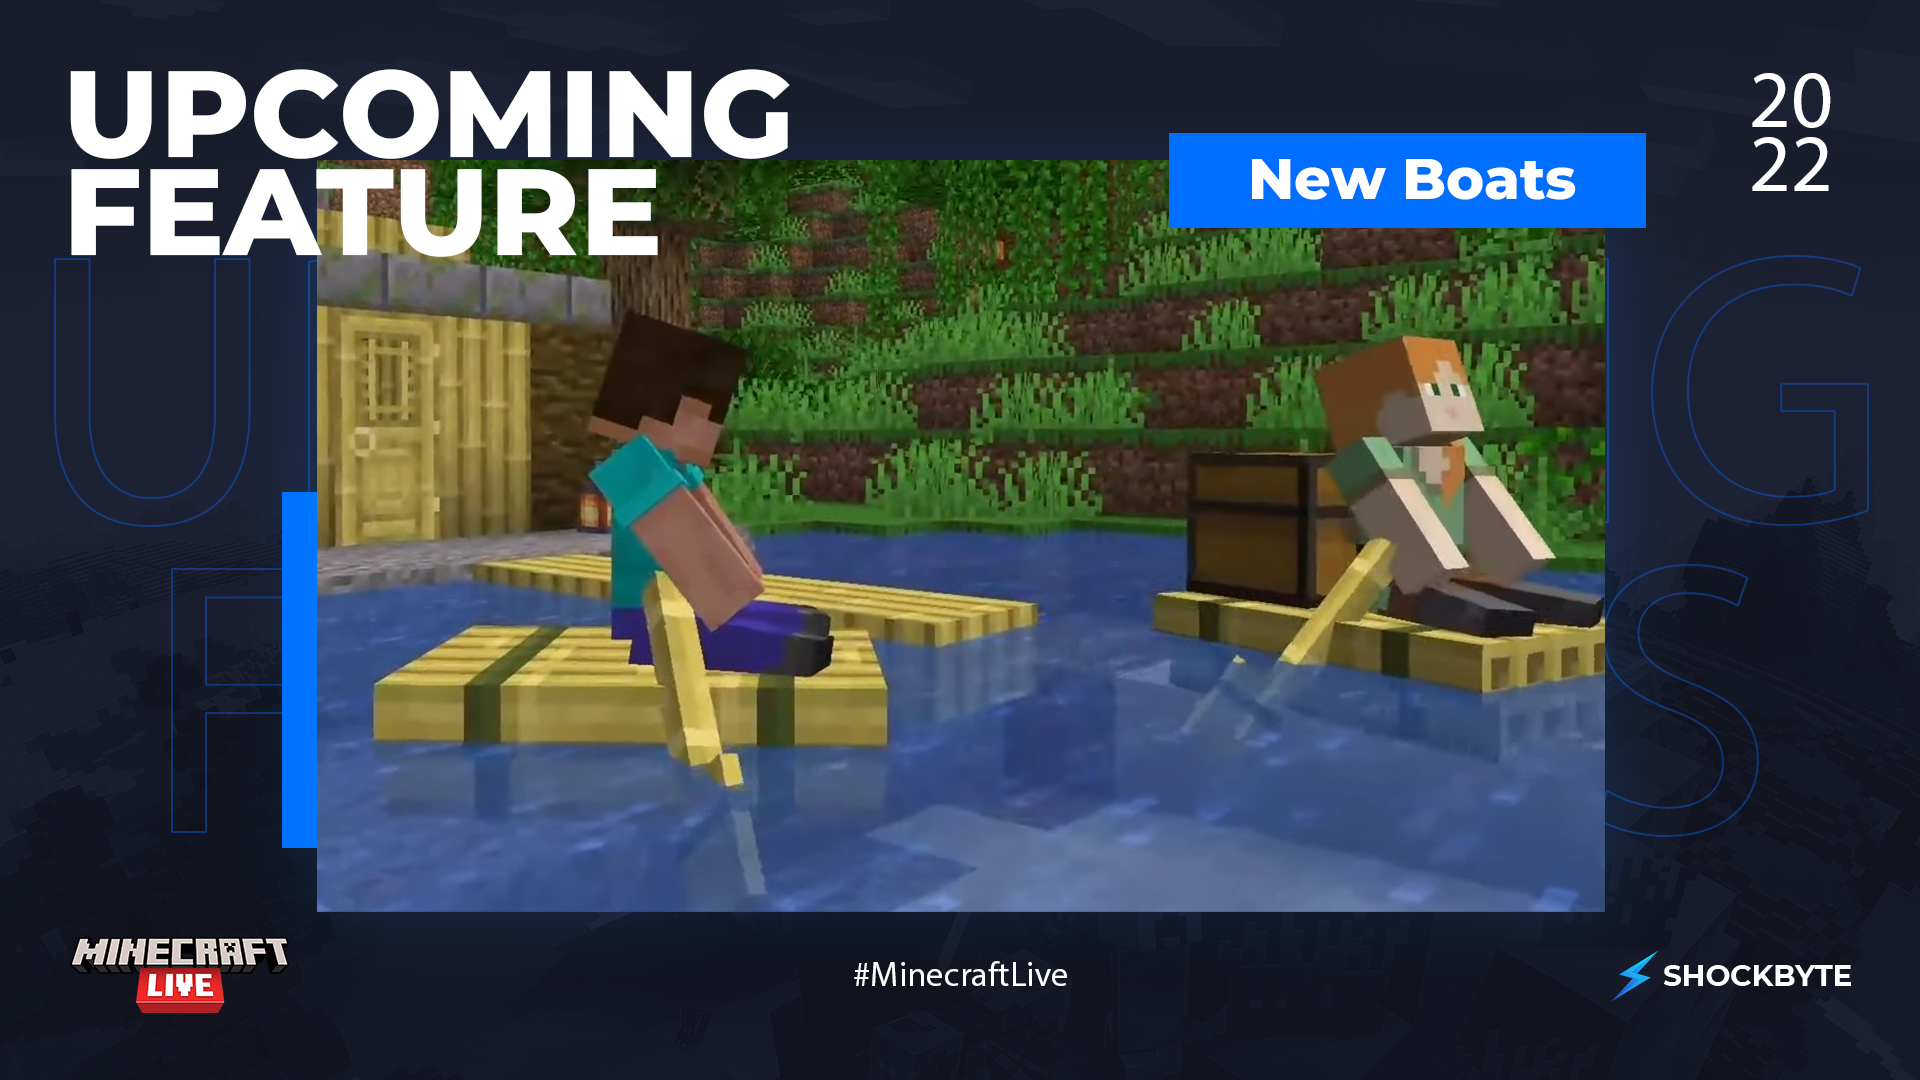 Minecraft Live Boats Update Feature Snapshot